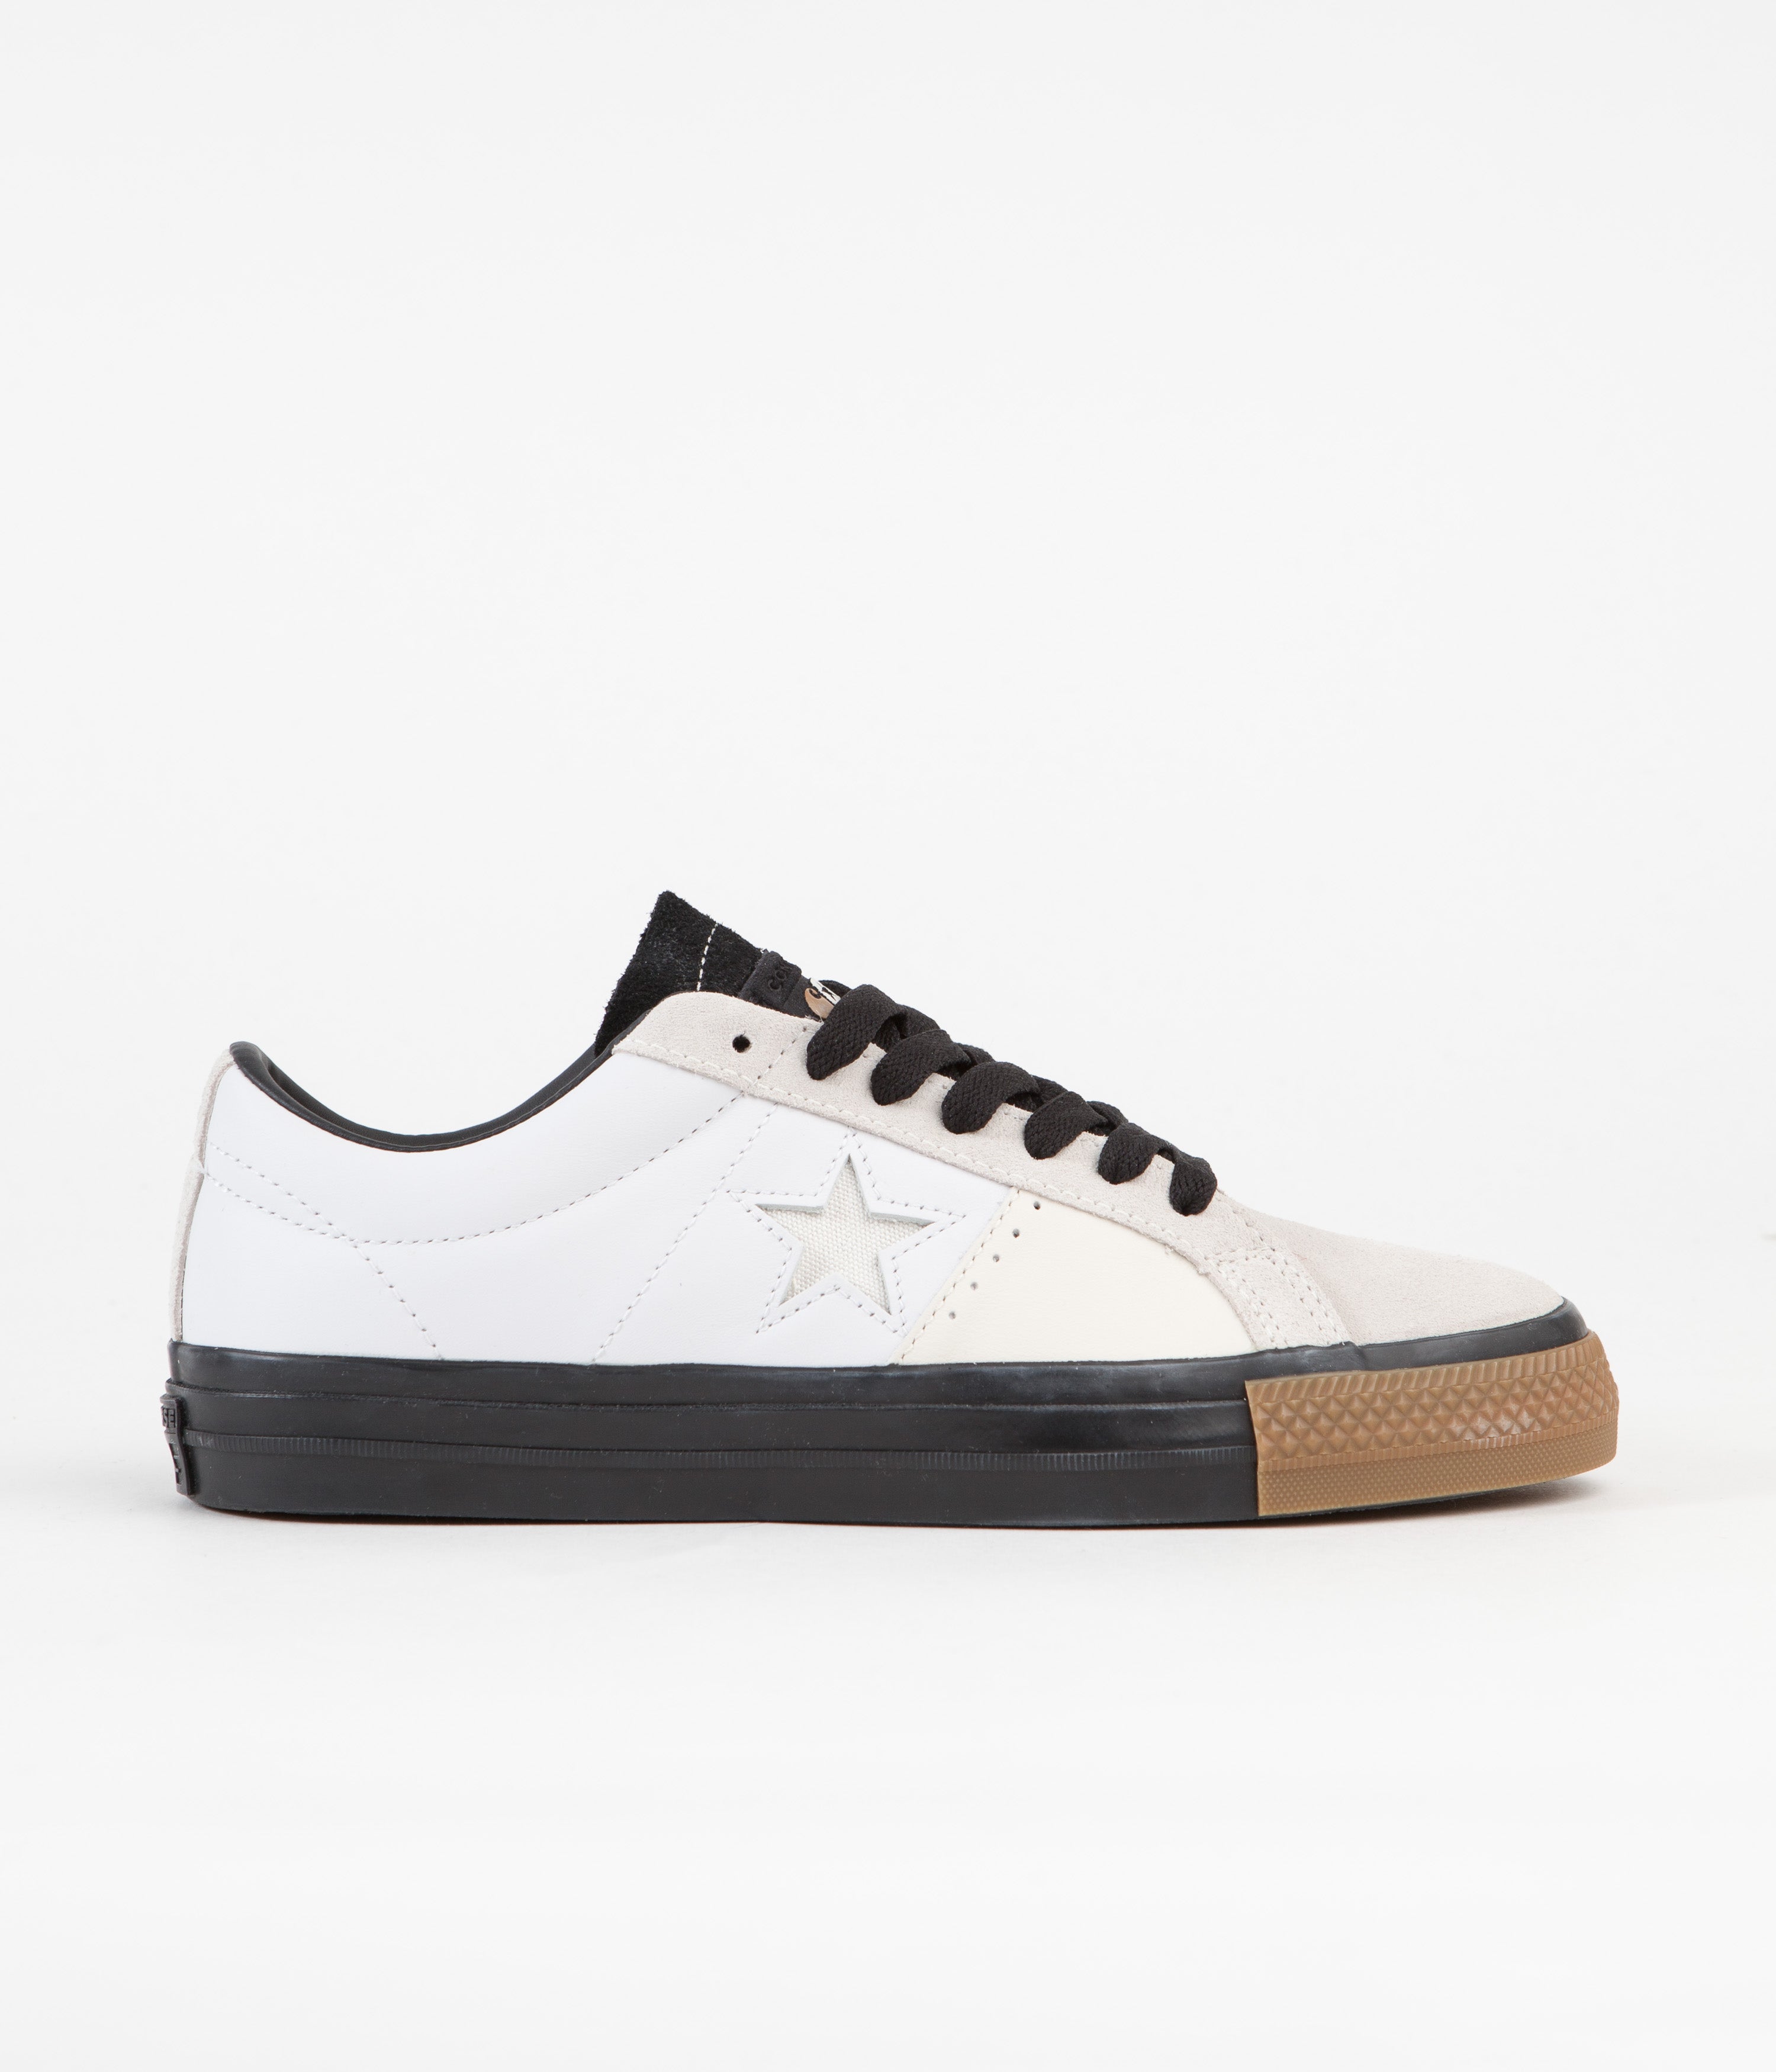 Converse x Carhartt Star Ox Shoes - White / Black / Gum | Flatspot